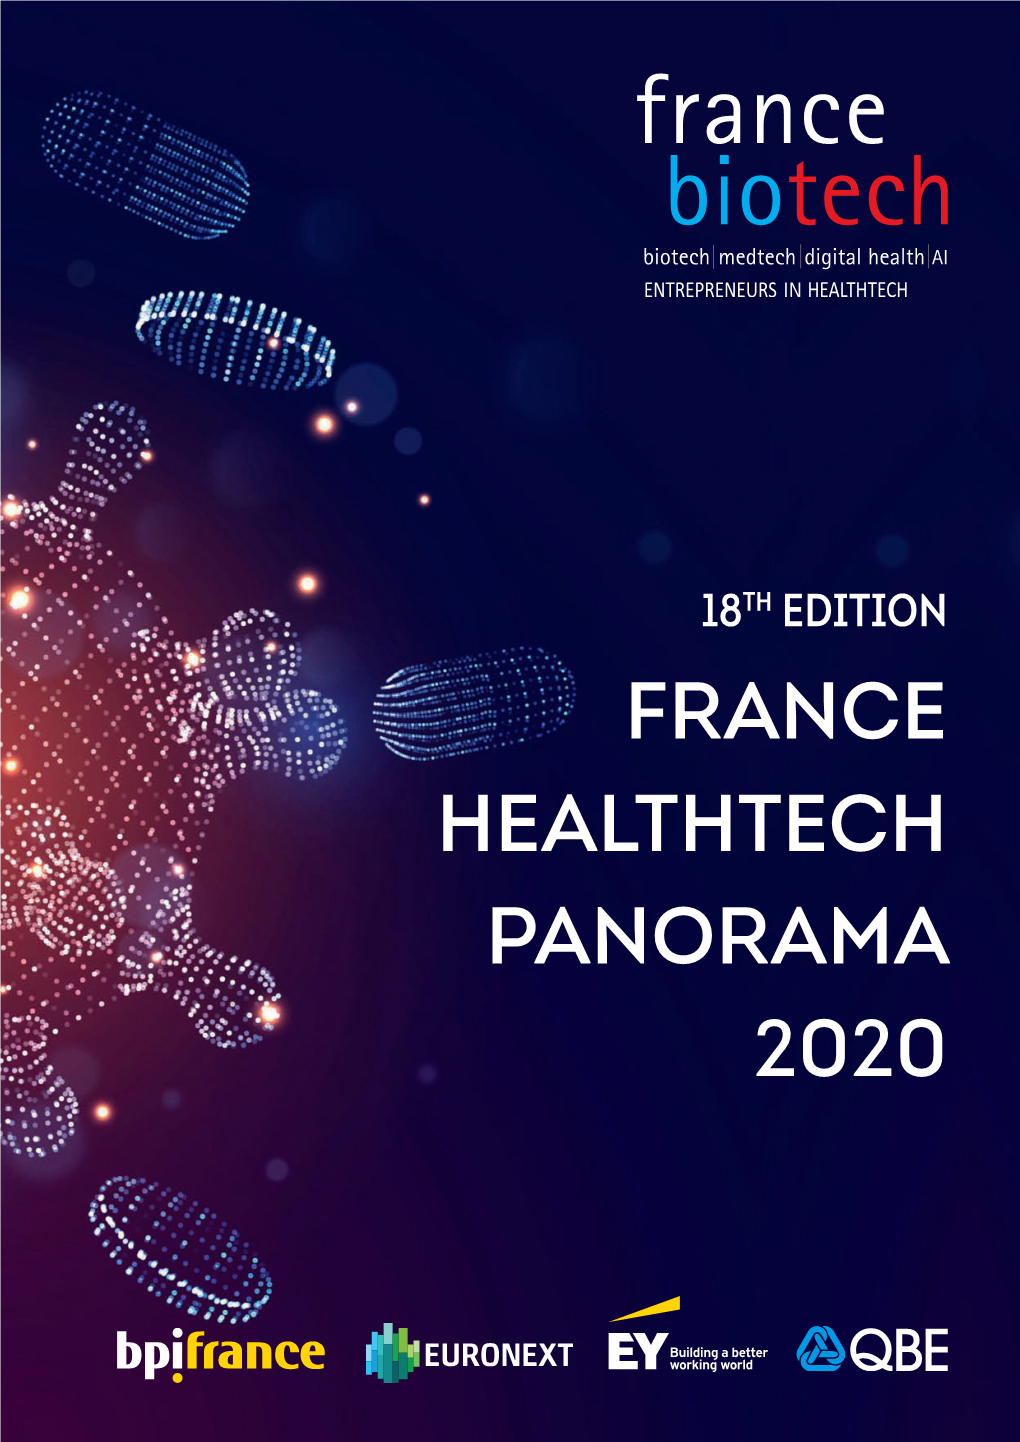 FRANCE HEALTHTECH PANORAMA 2020 Editorial